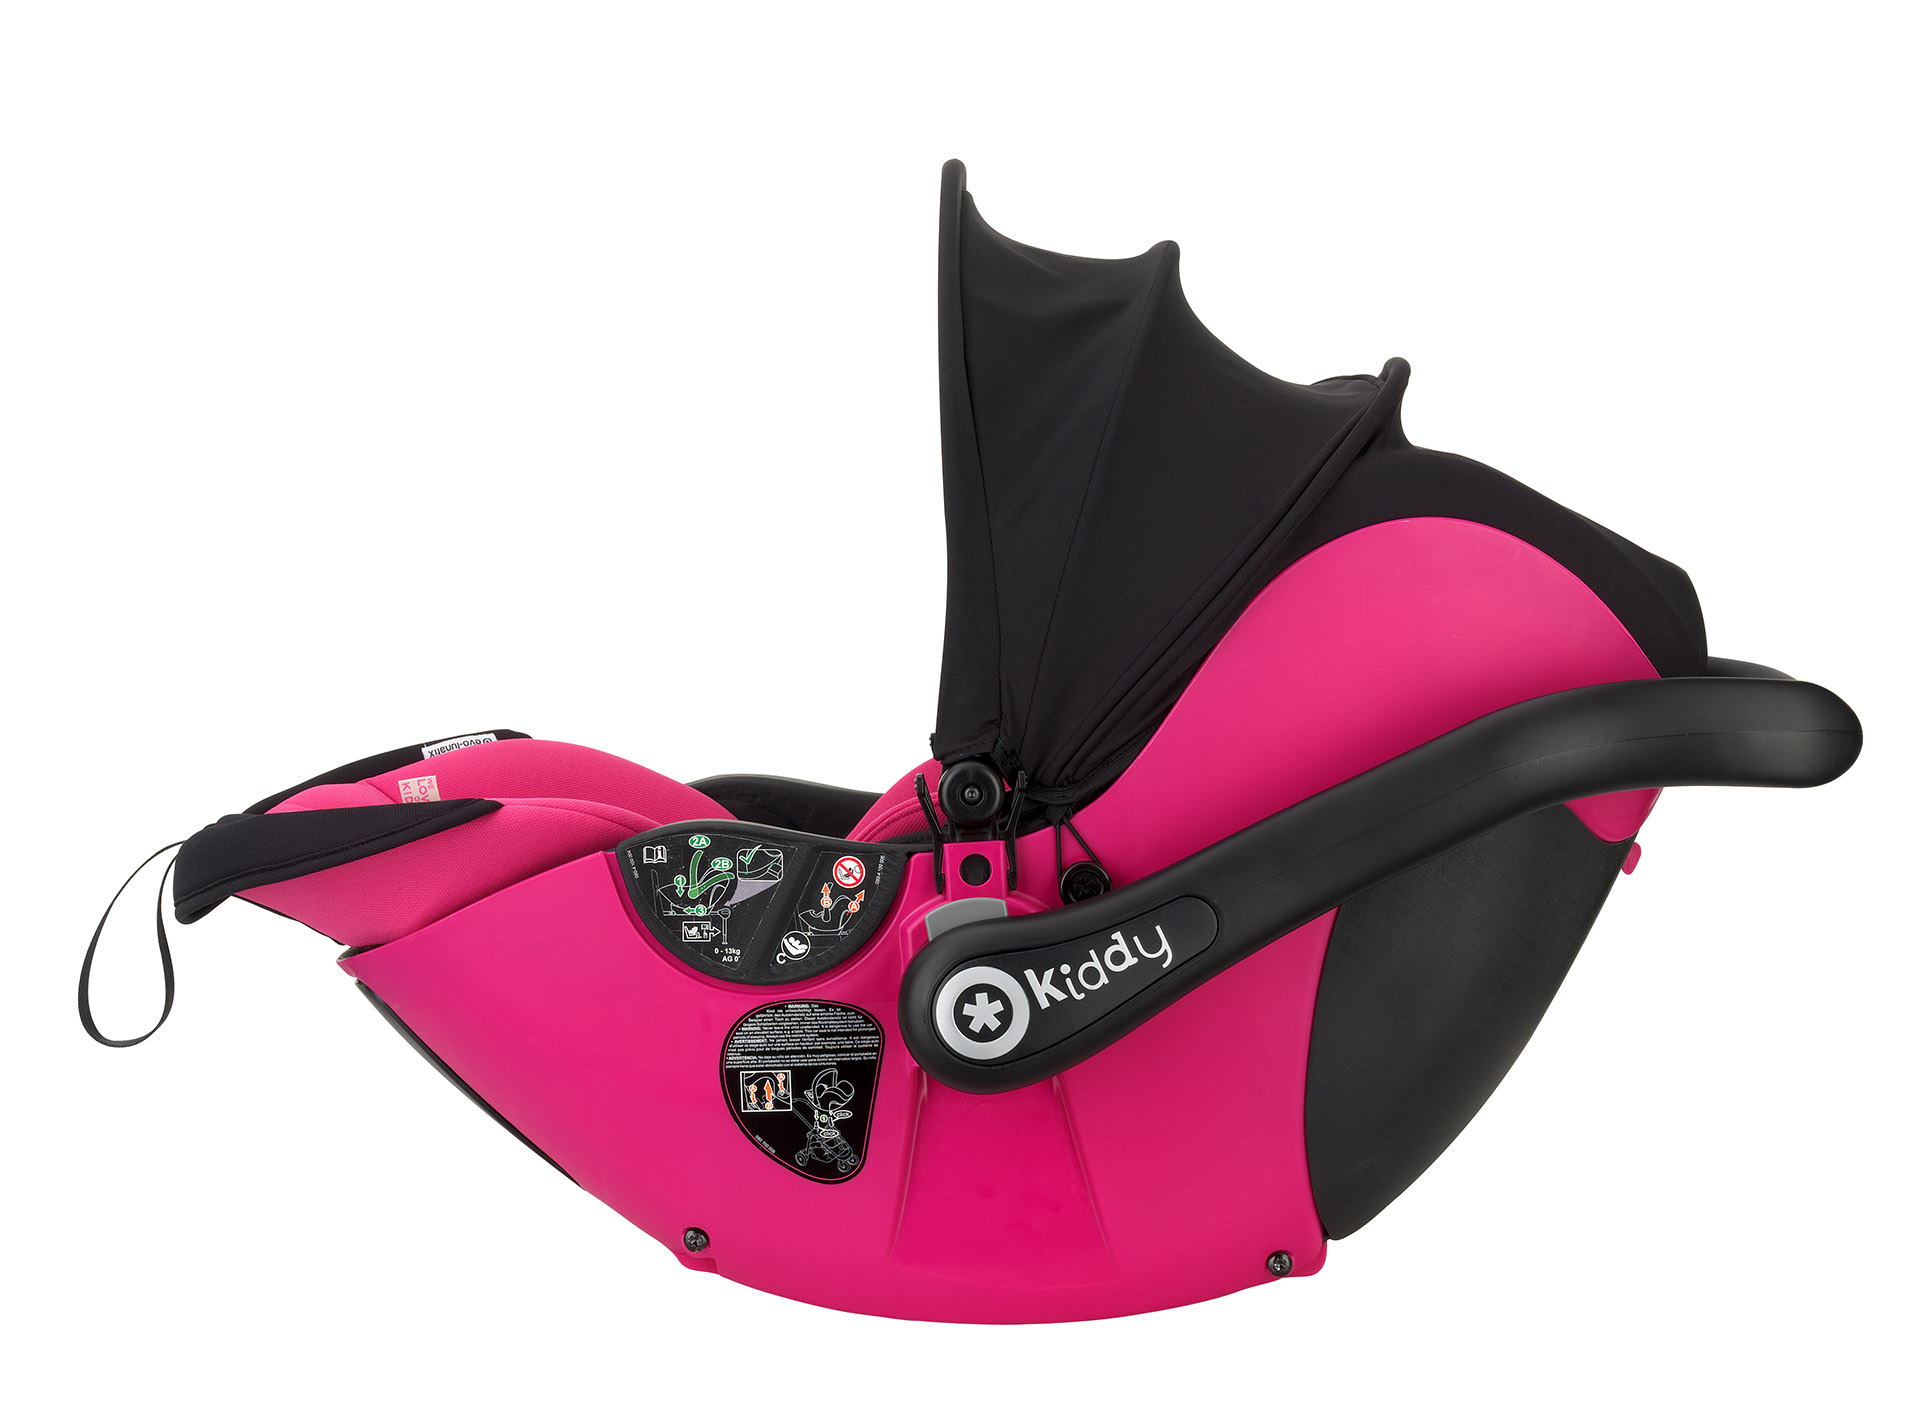 Produktfreisteller Kindersitz pink kiddy. Feigefotodesign